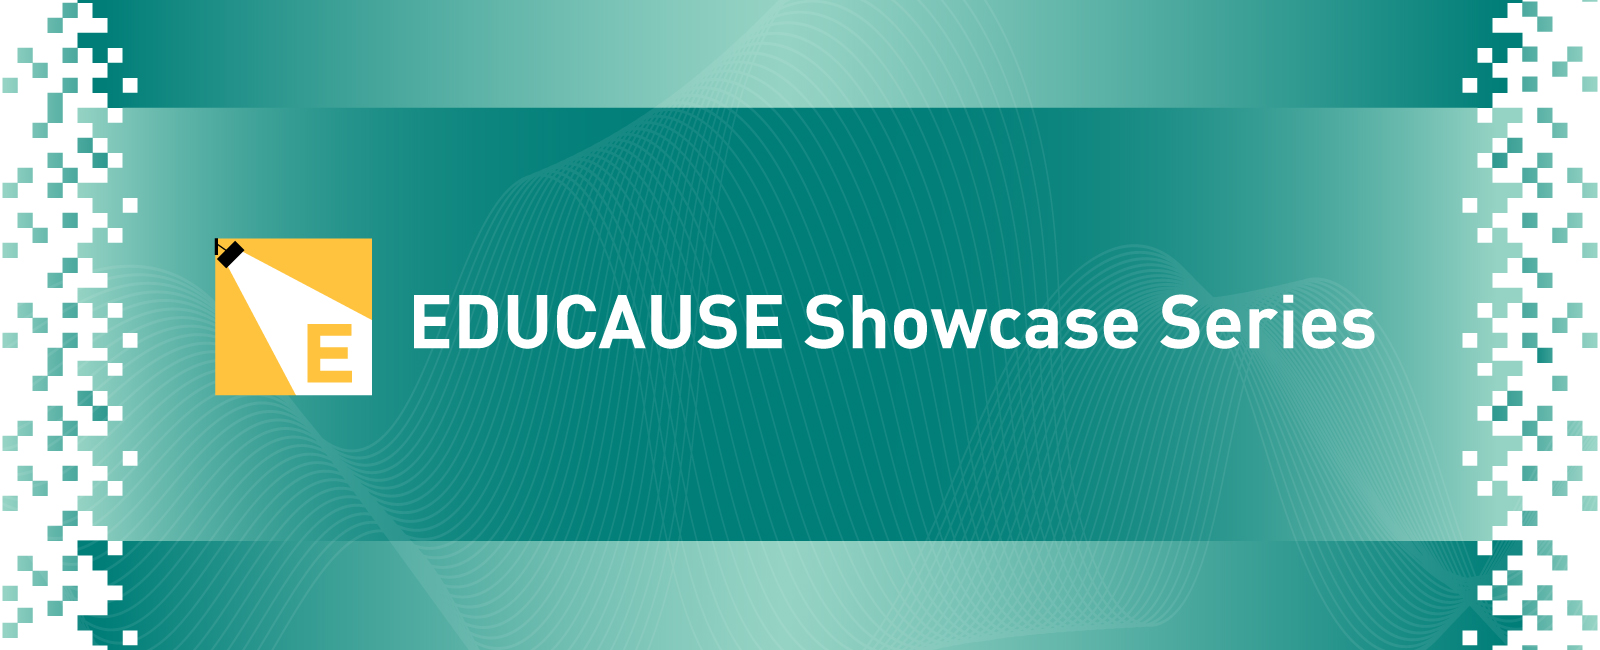 EDUCAUSE Showcase Series